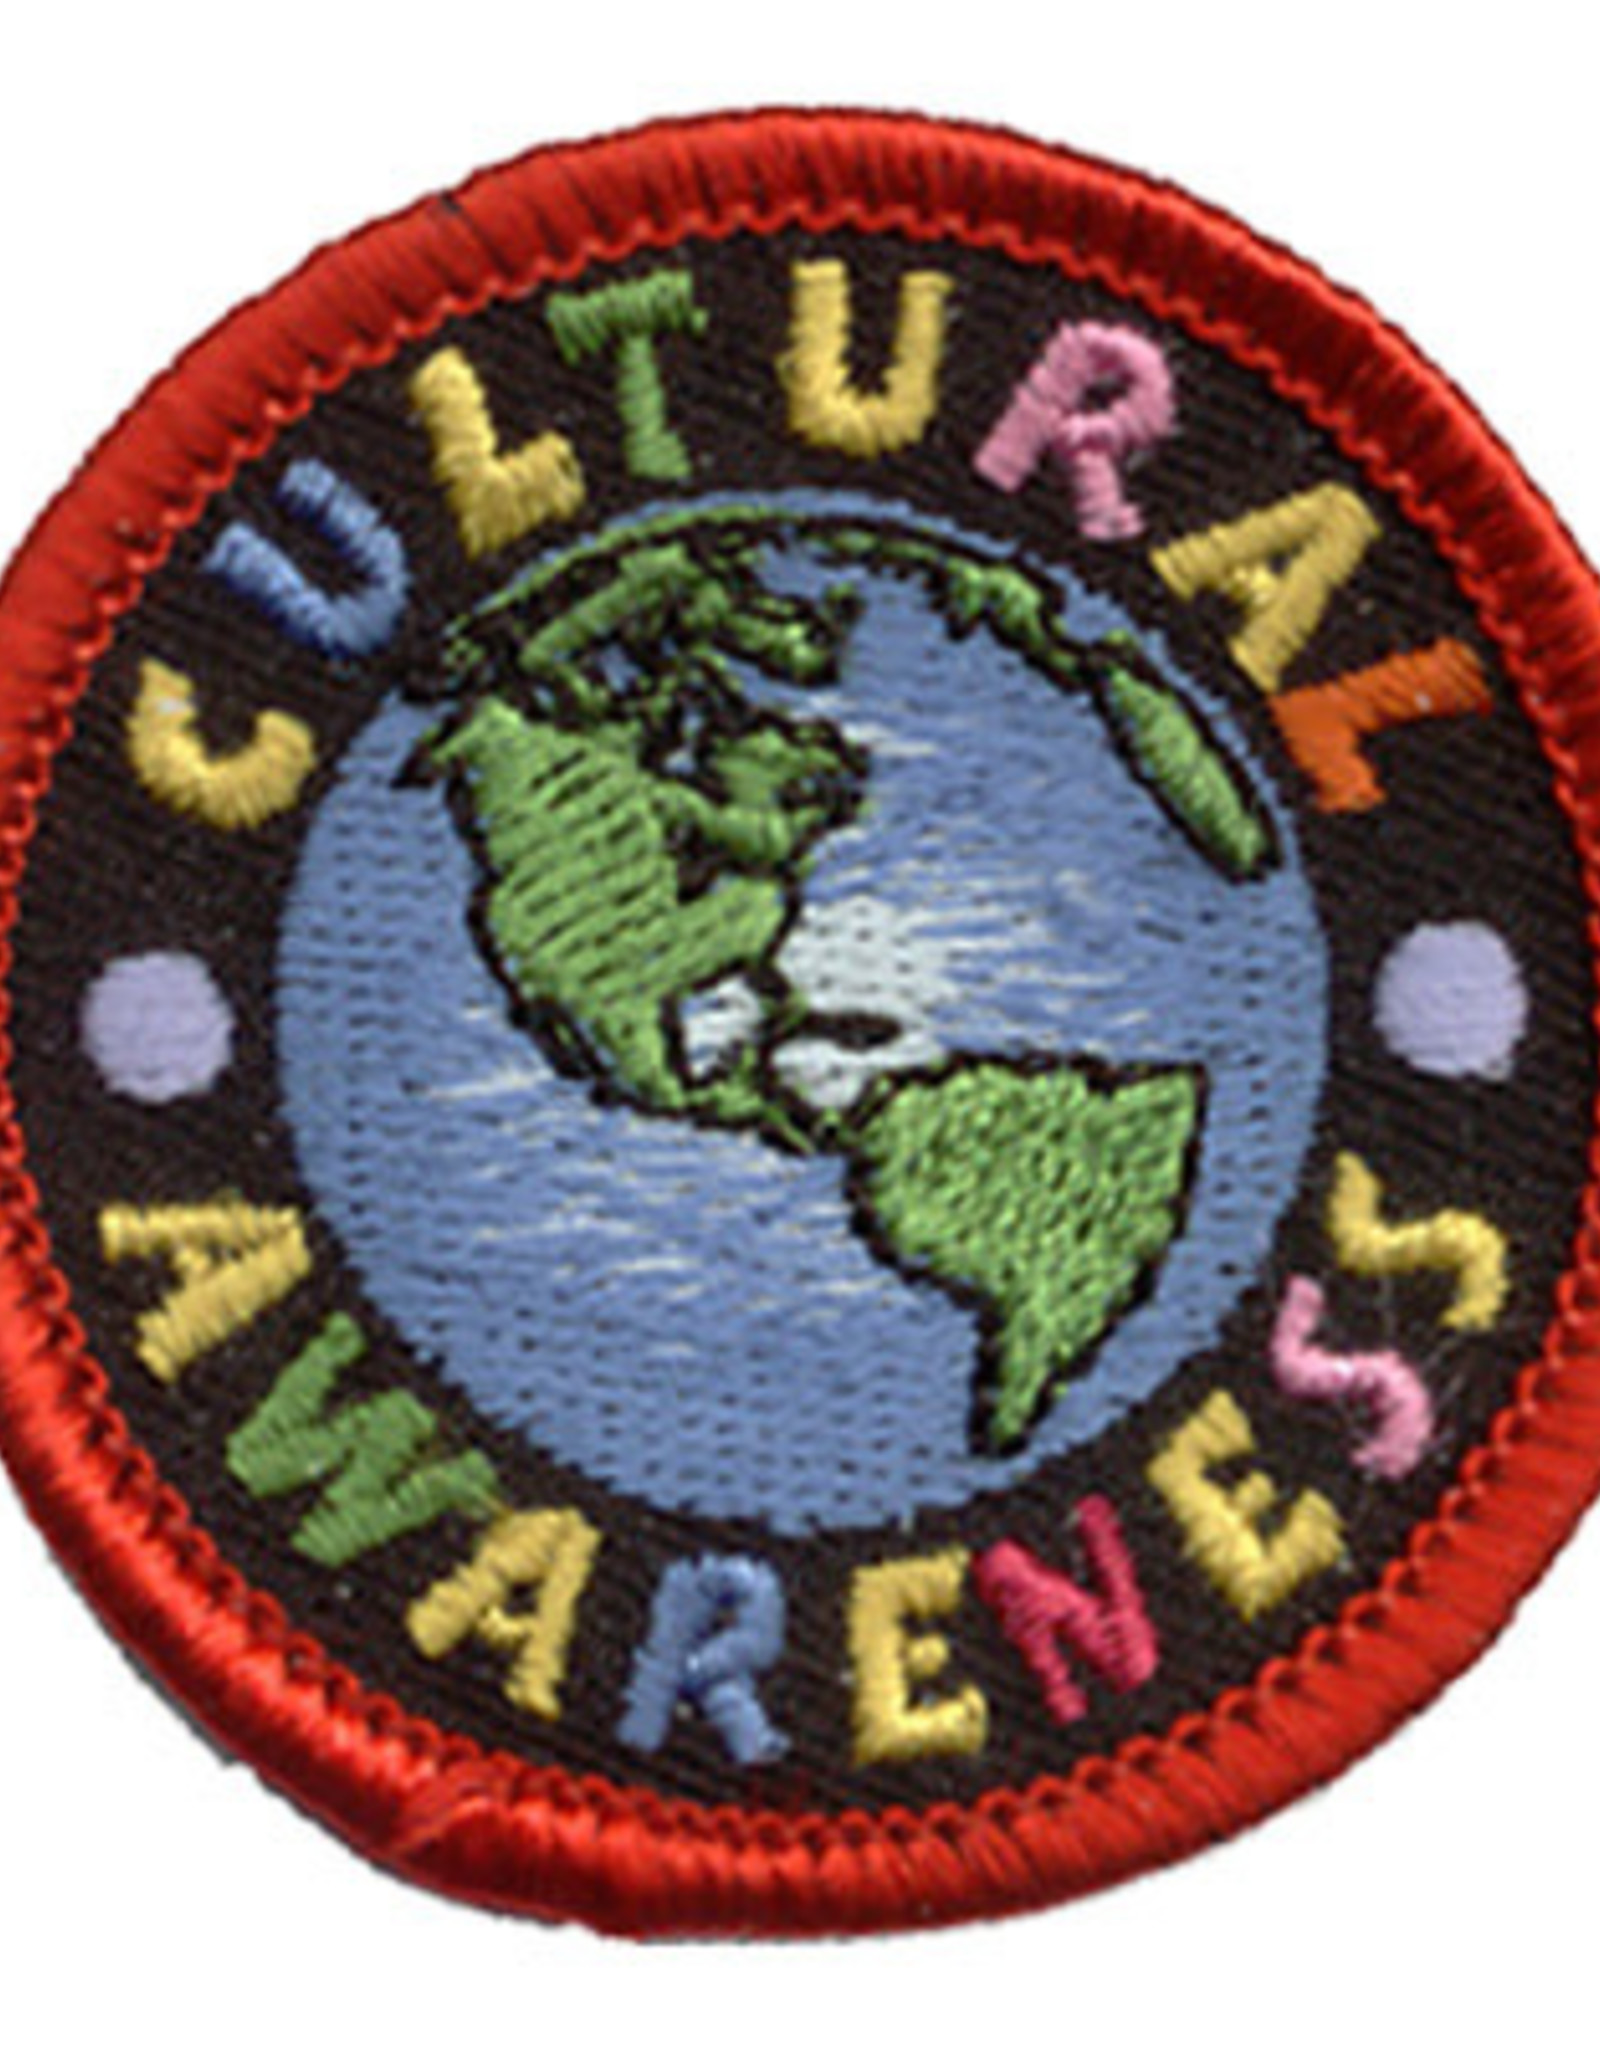 Advantage Emblem & Screen Prnt Cultural Awareness w/ Globe Fun Patch